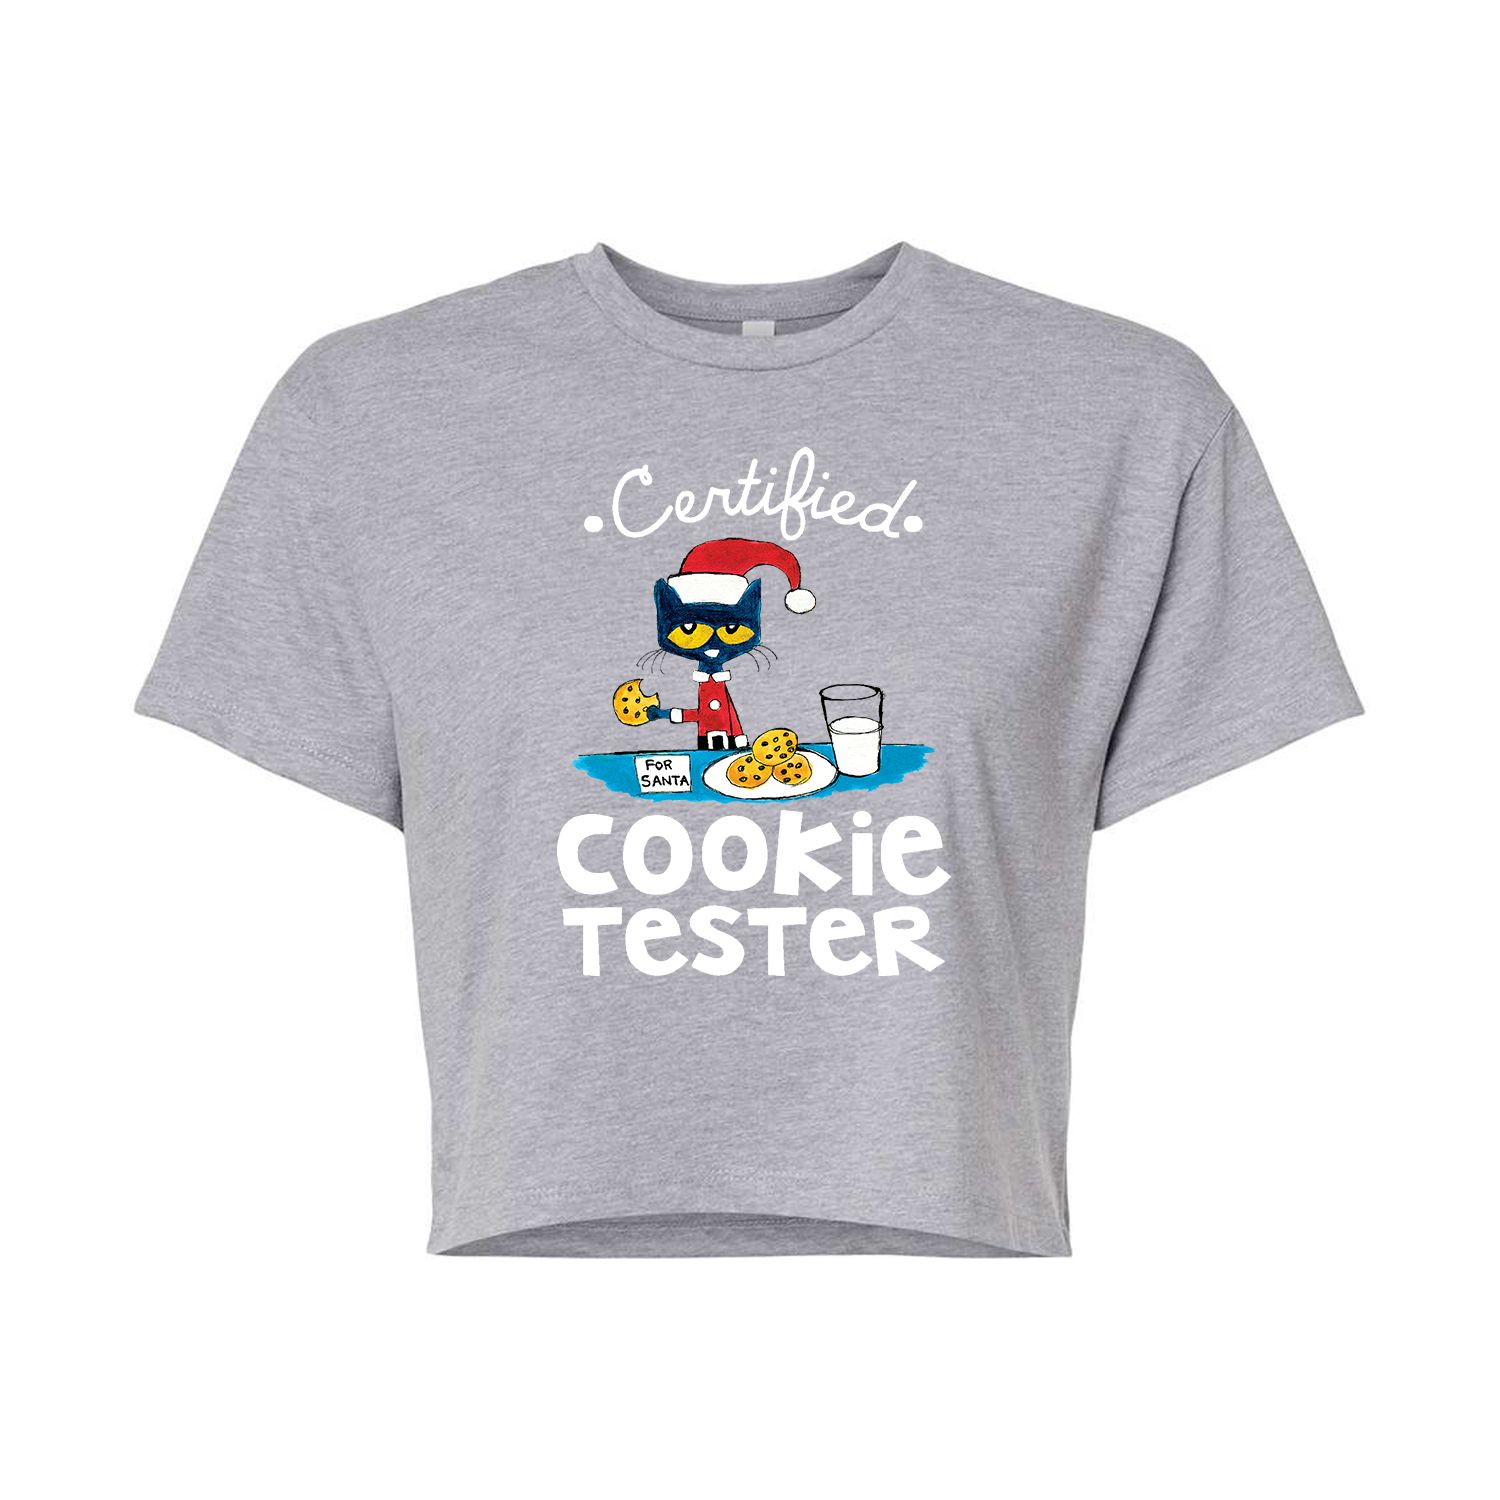 Укороченная футболка с рисунком Pete The Cat Cookie Tester для юниоров Licensed Character укороченная футболка с рисунком pete the cat making friends для юниоров licensed character